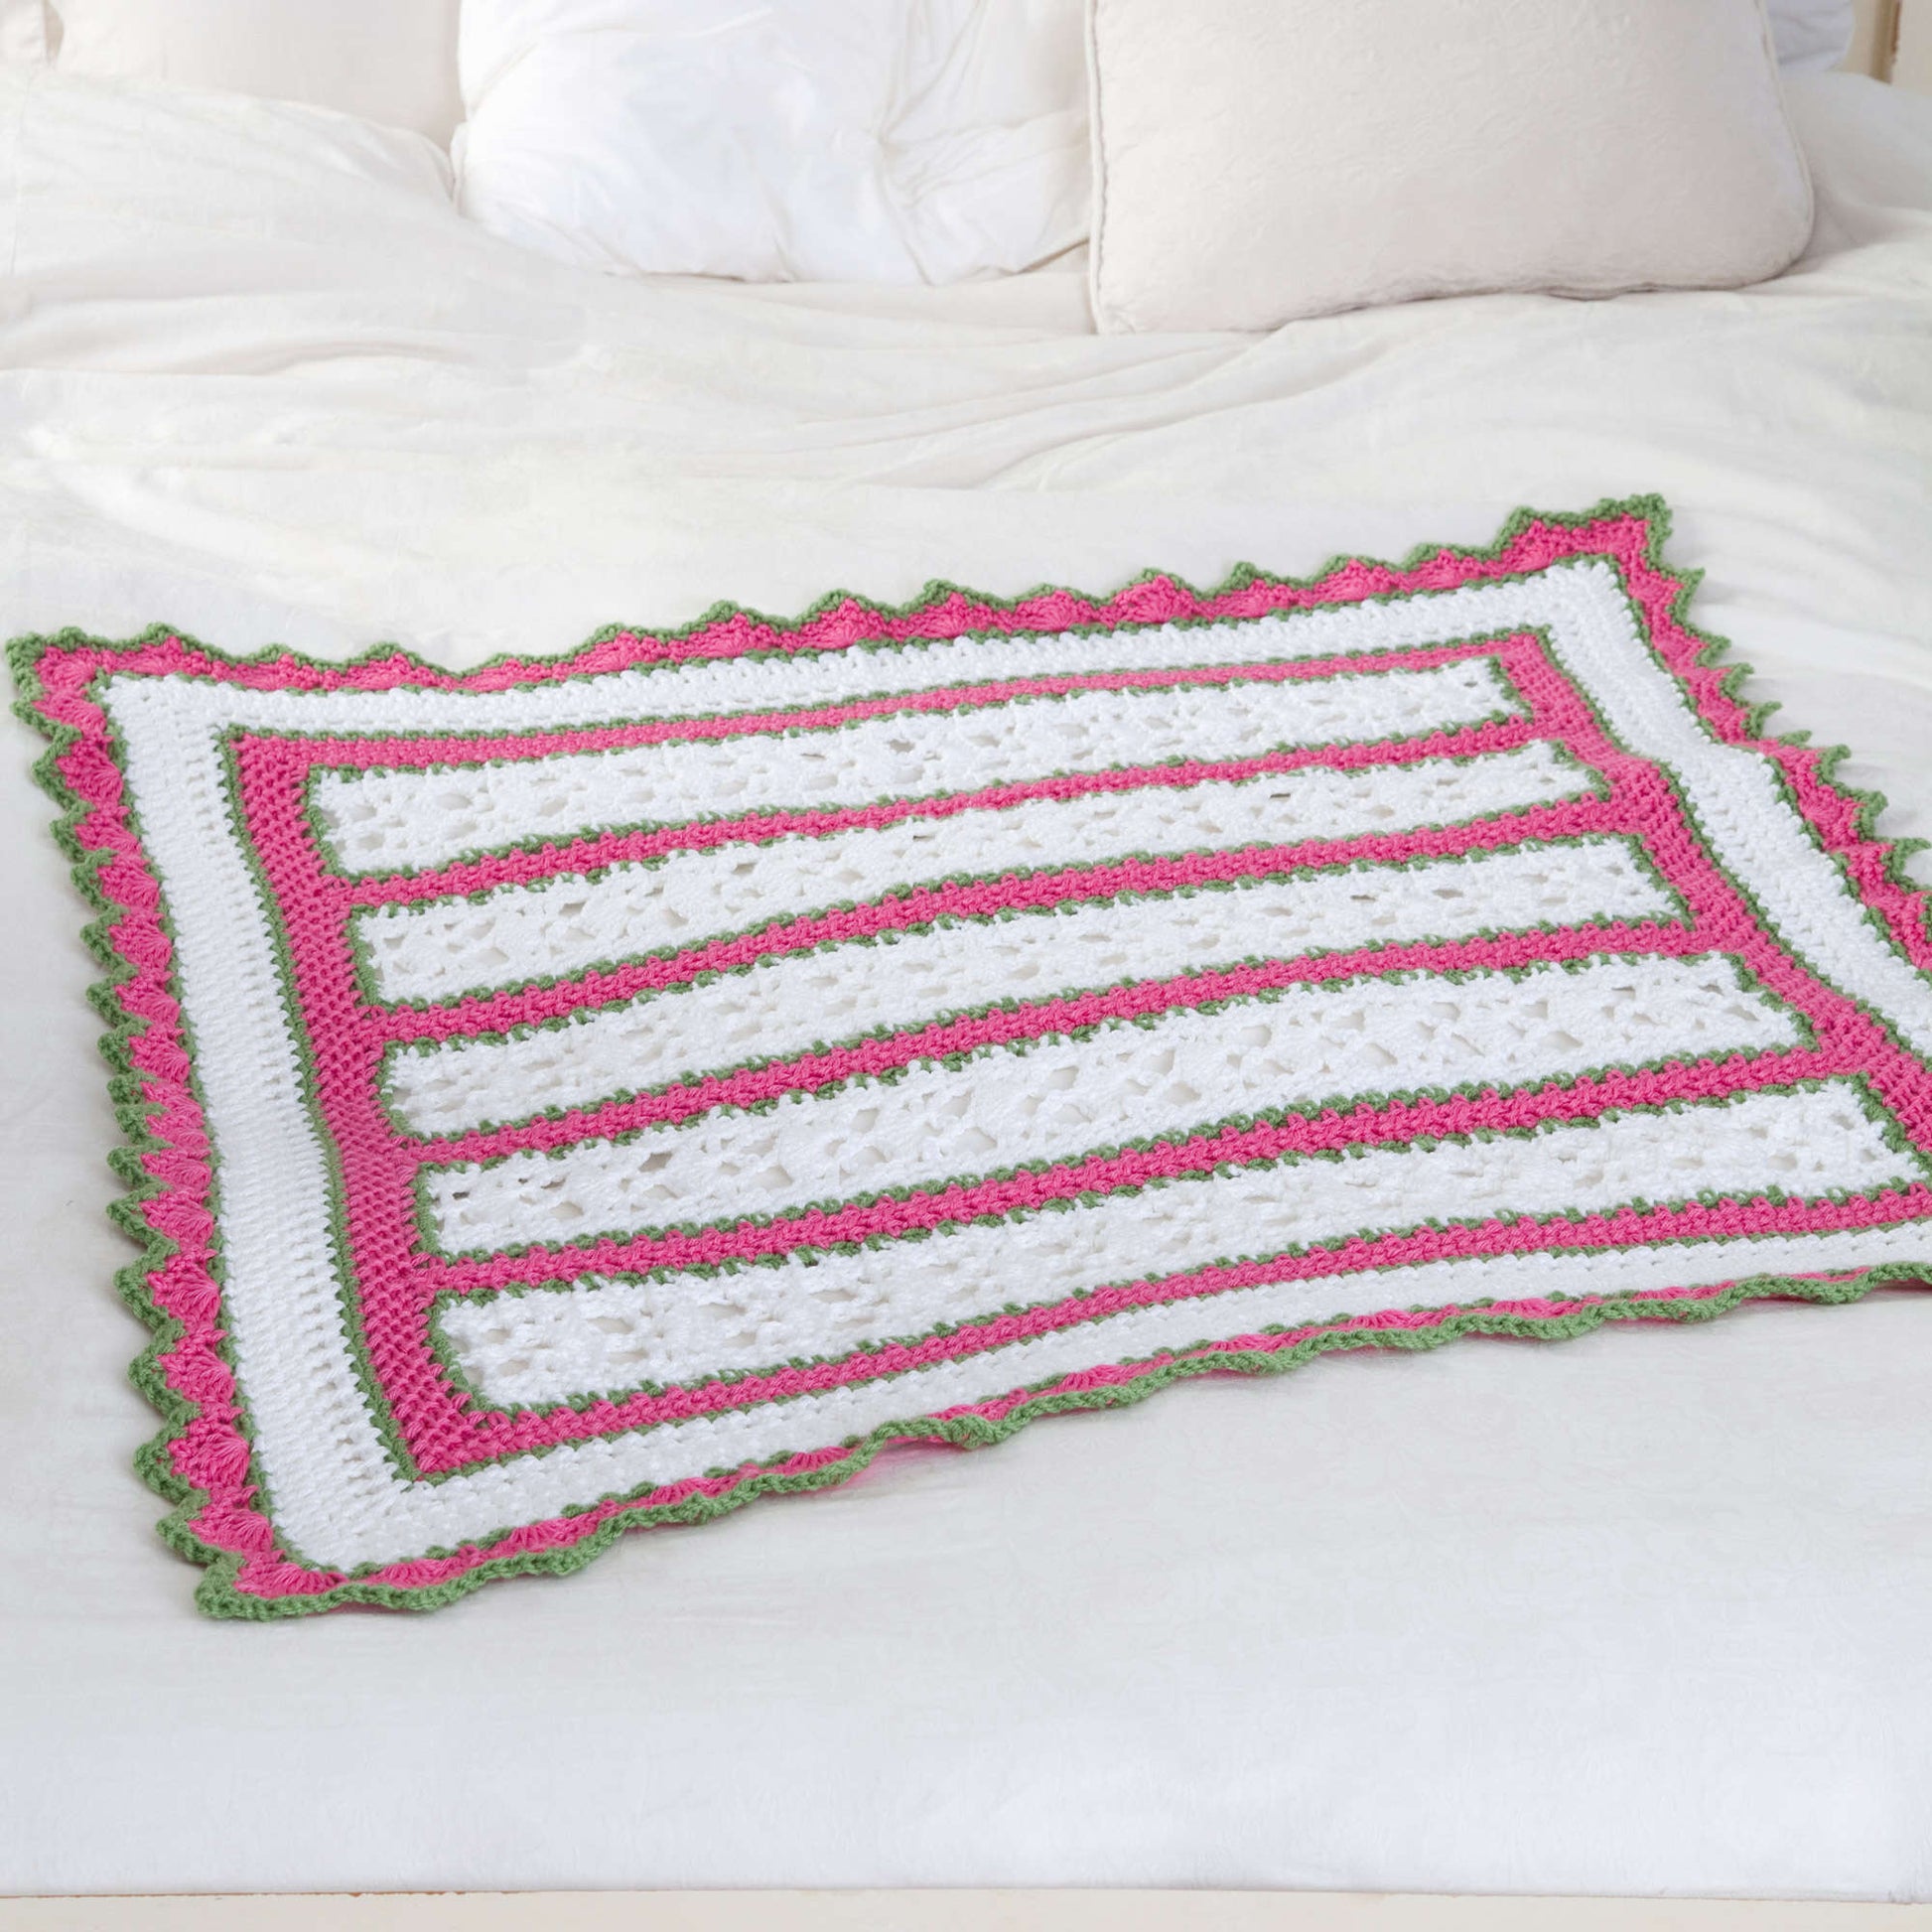 Free Red Heart Summer Crochet Baby Blanket Pattern